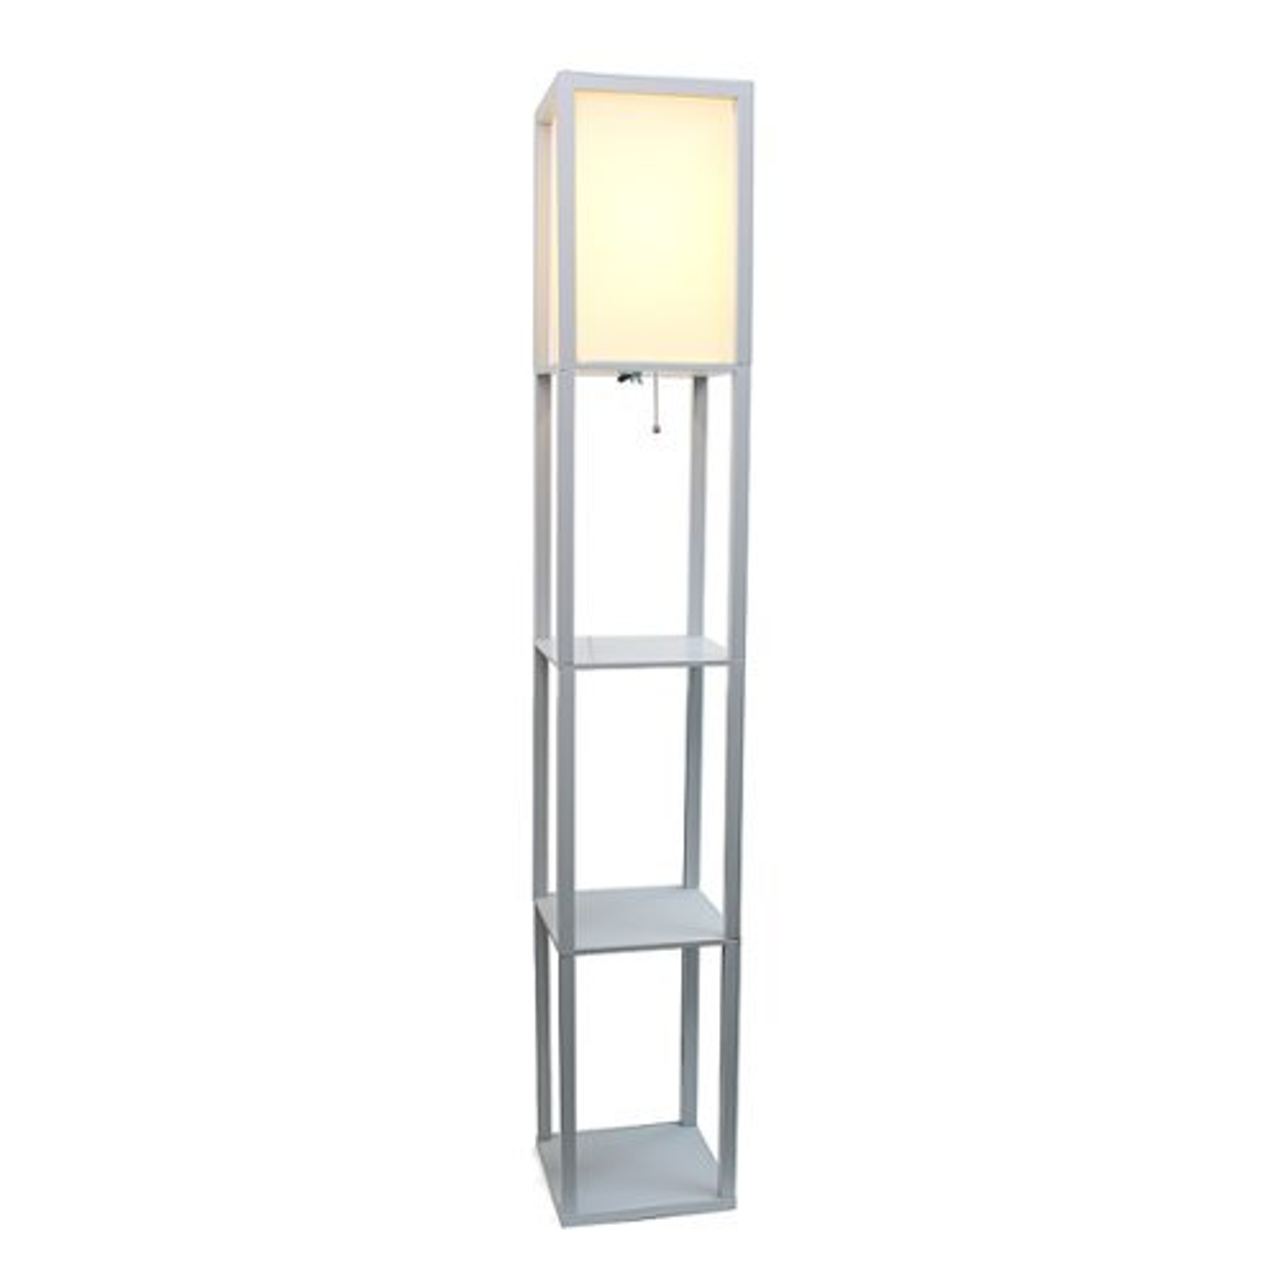 Lalia Home Column Shelf Floor Lamp with Linen Shade, Gray - GRAY